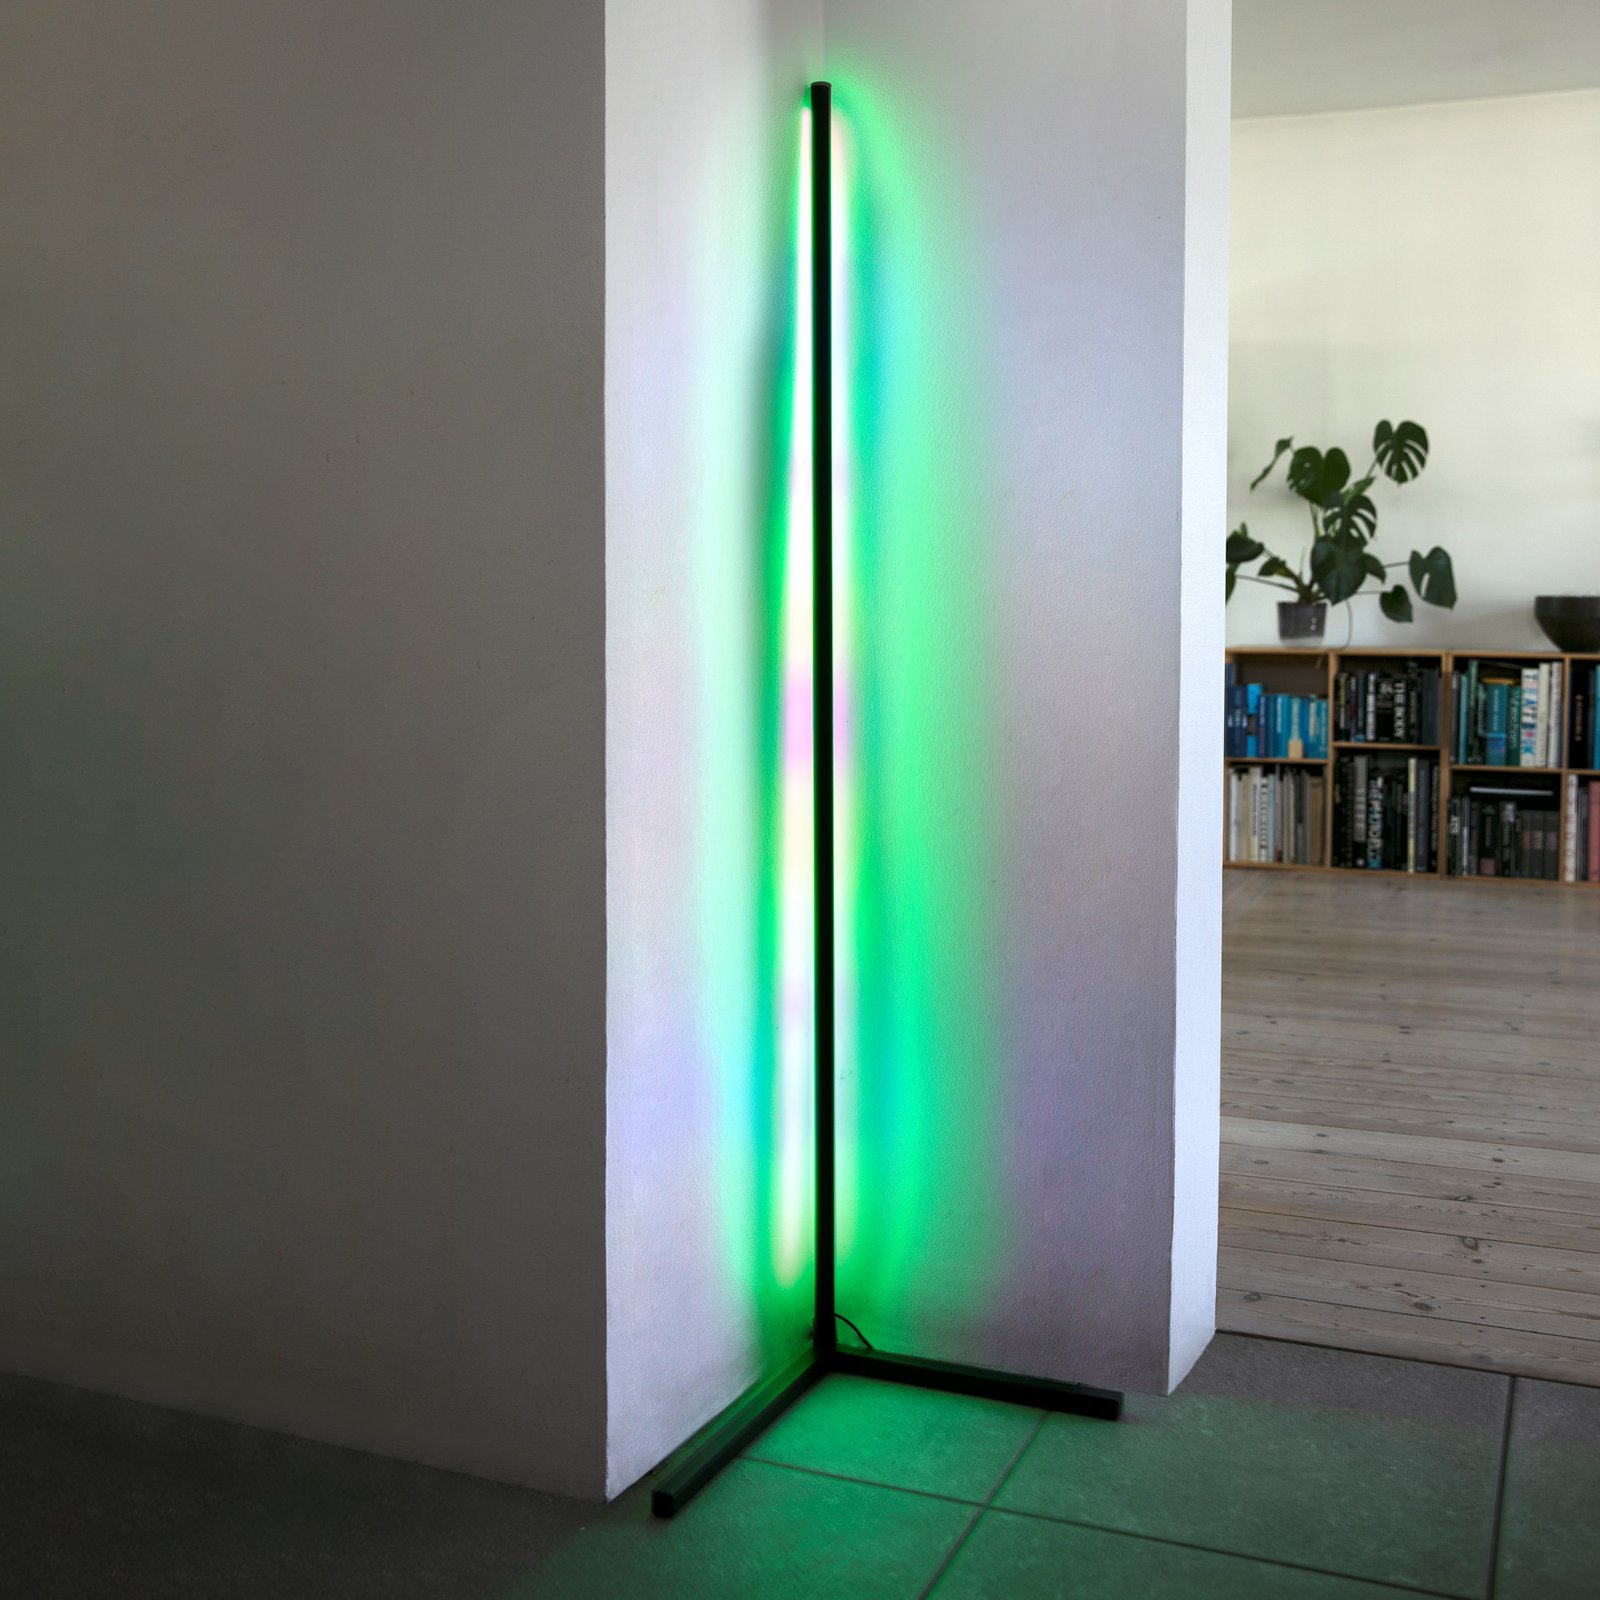 Lite Bulb Moments piantana LED RGB altezza 140 cm